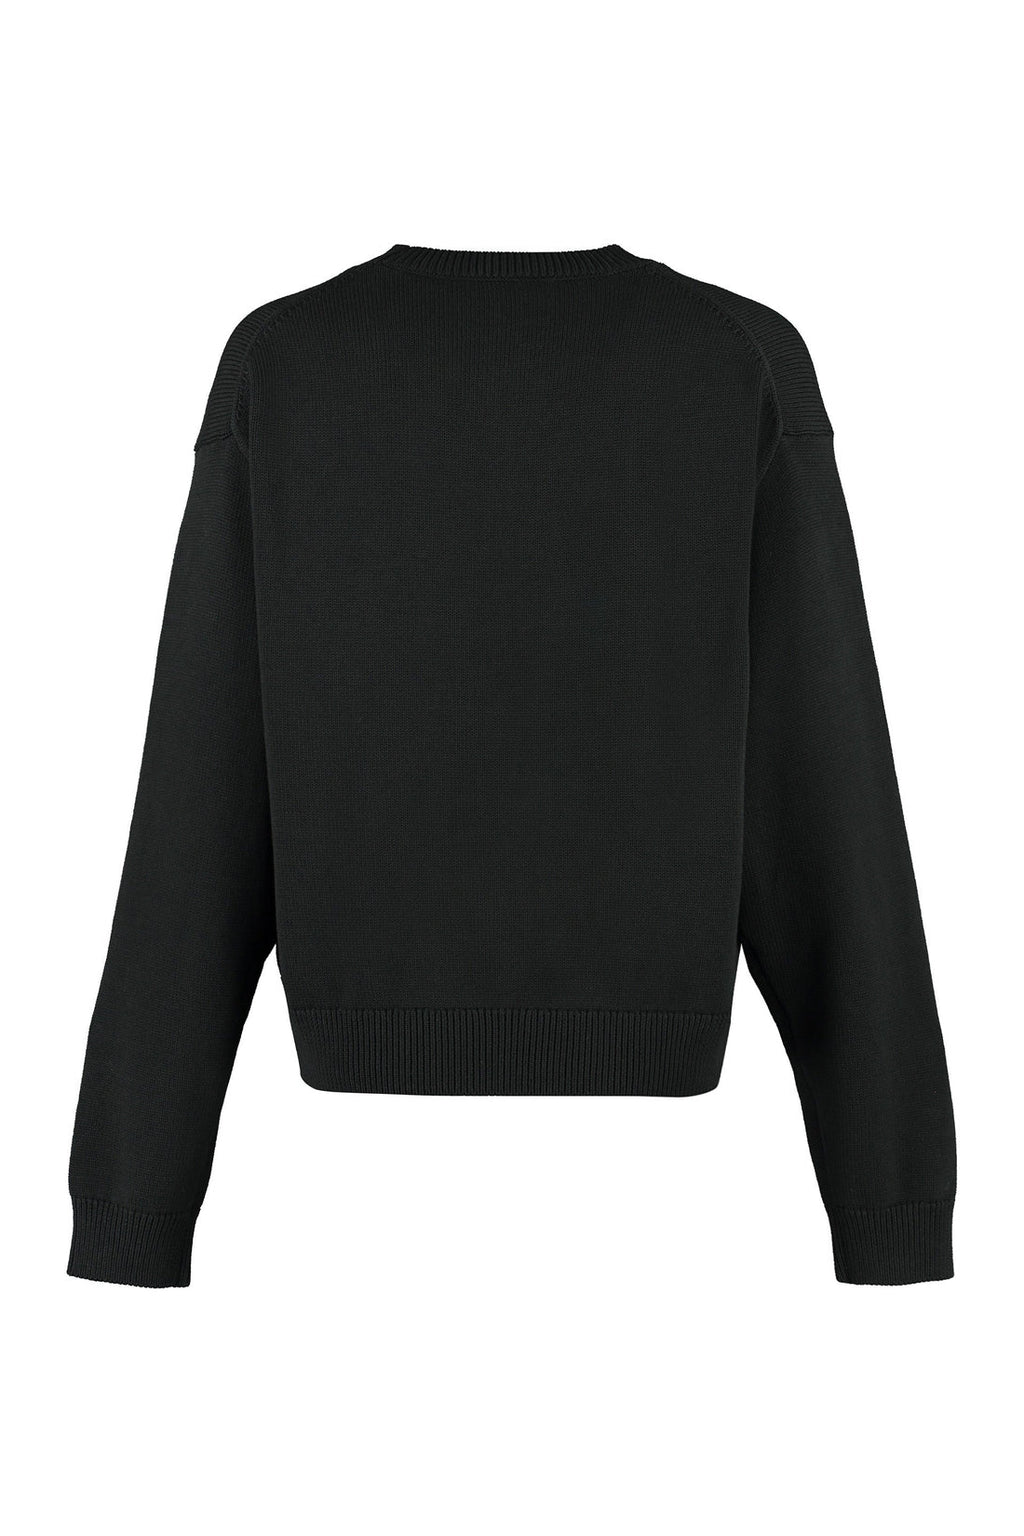 Kenzo-OUTLET-SALE-Cotton crew-neck sweater-ARCHIVIST